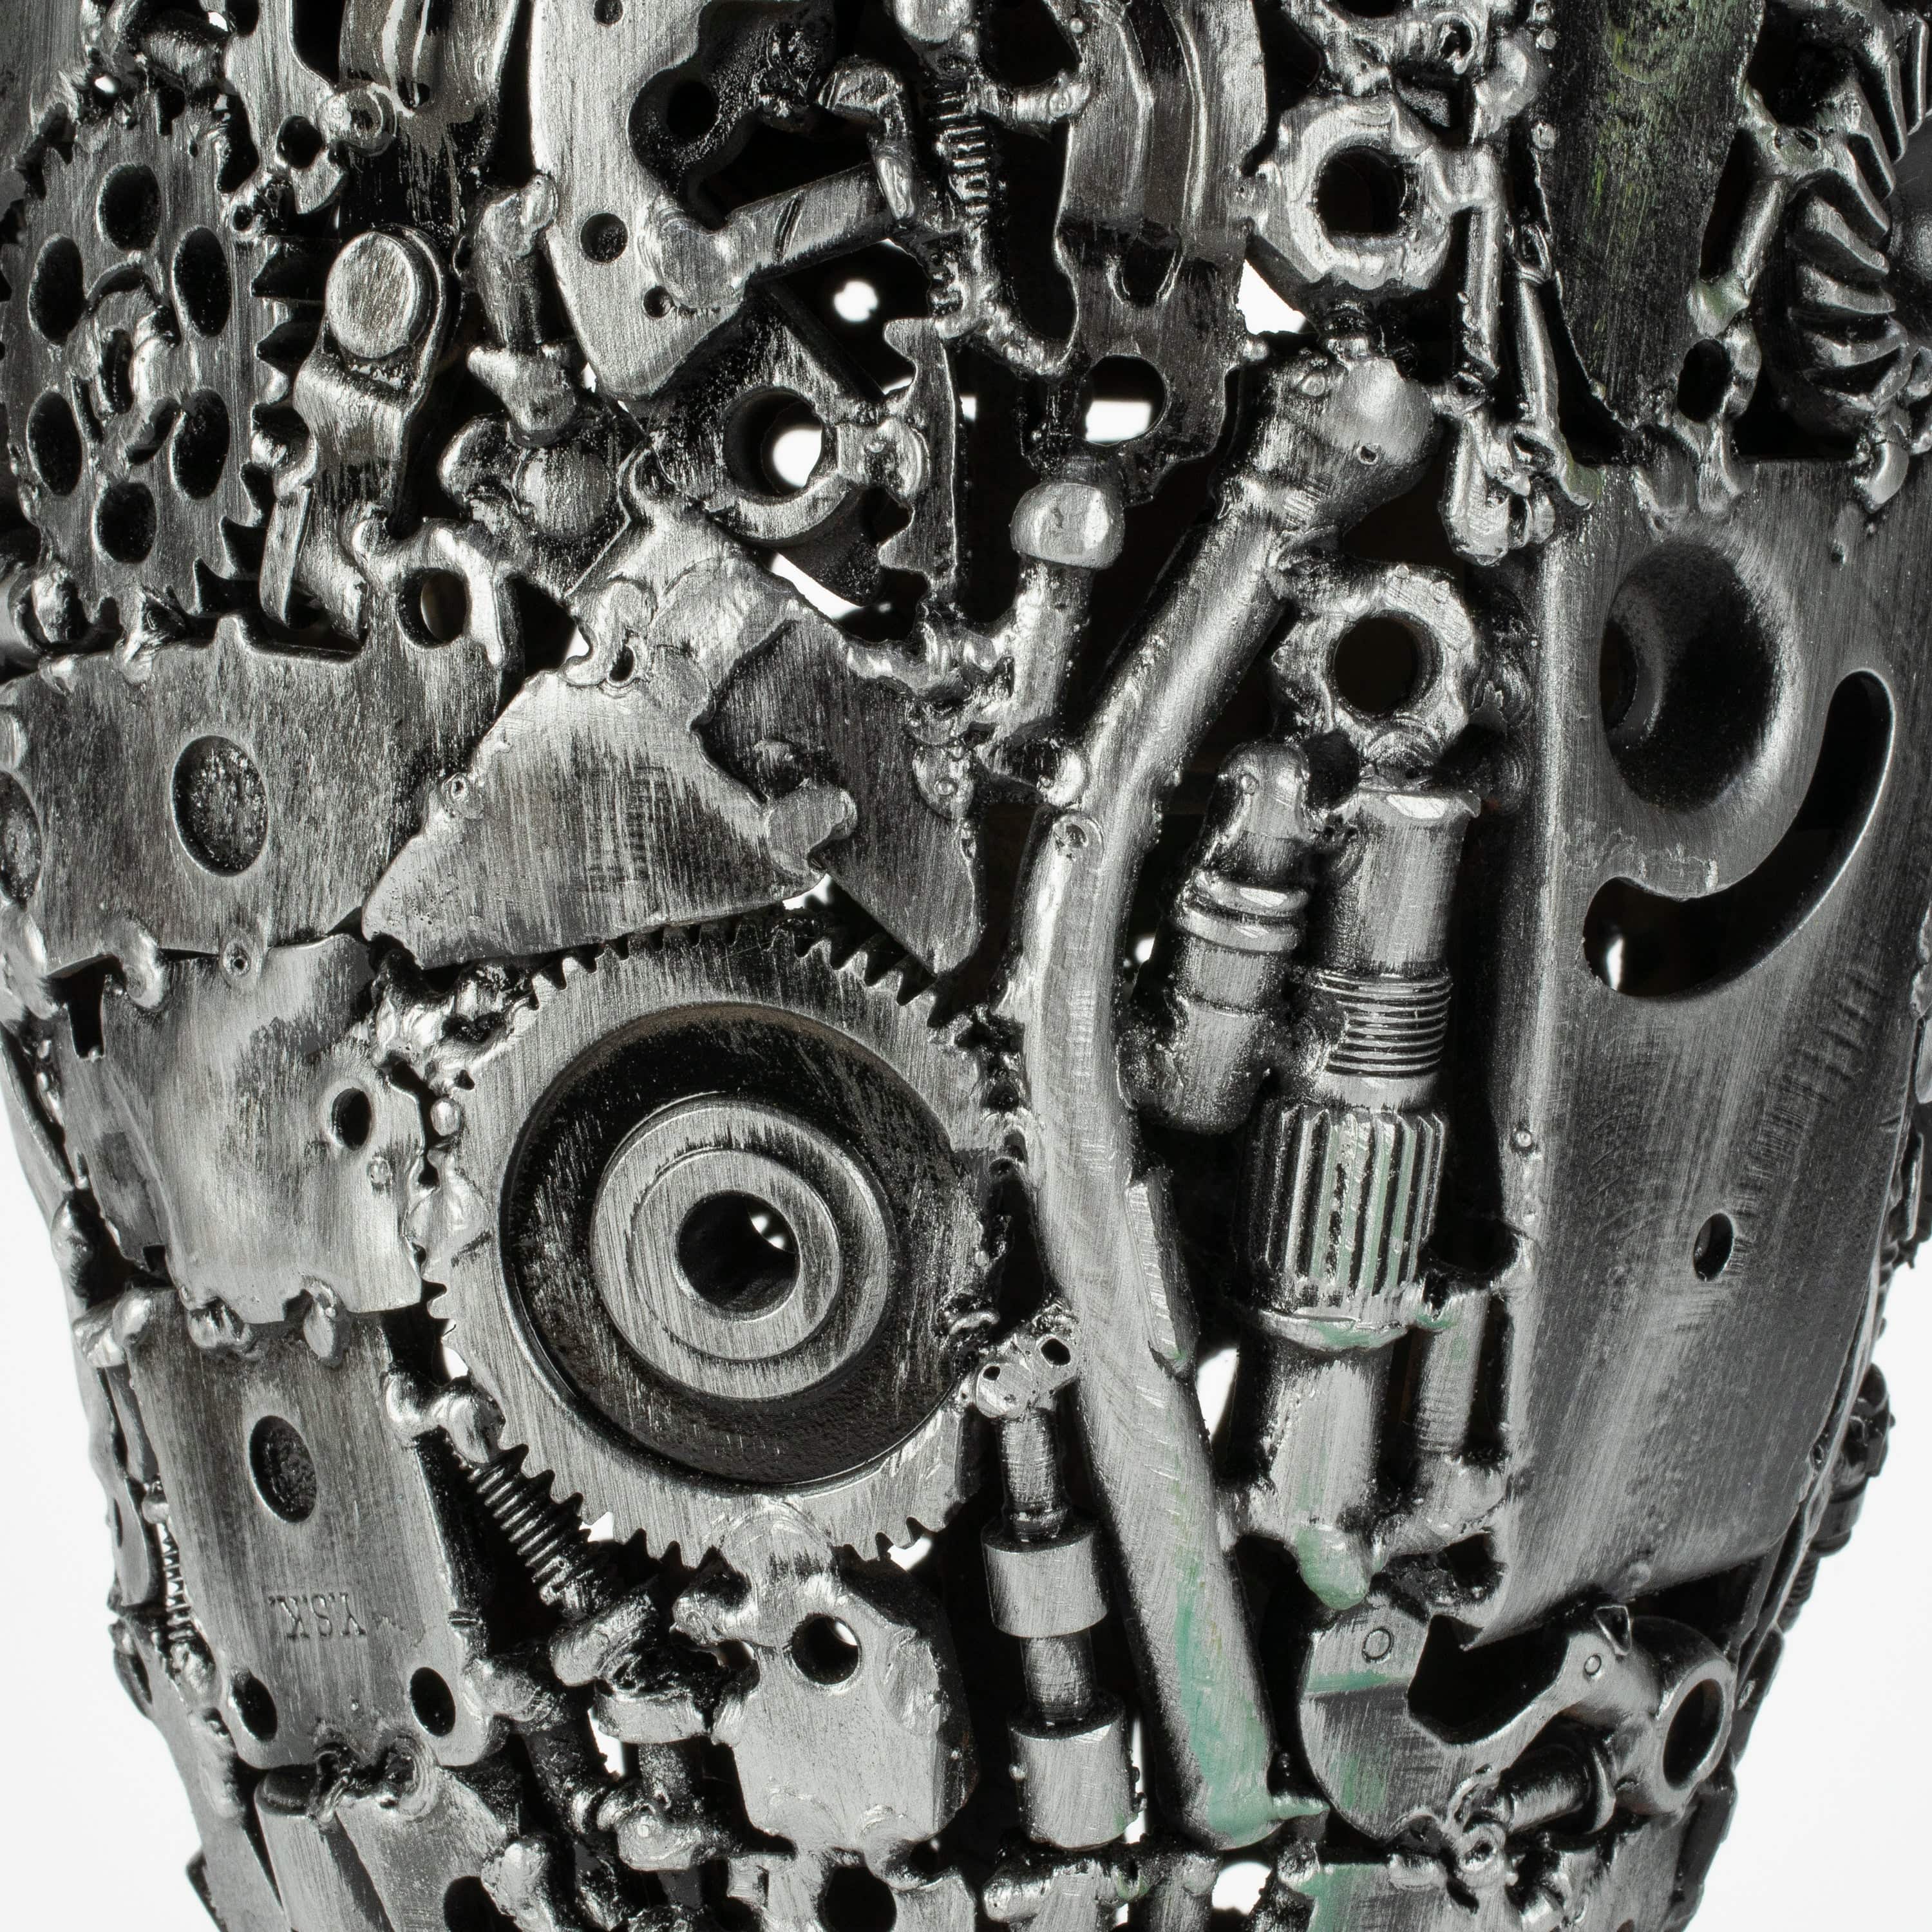 KALIFANO Recycled Metal Art 24" Premier League Trophy Inspired Recycled Metal Art Sculpture RMS-PLT60-N